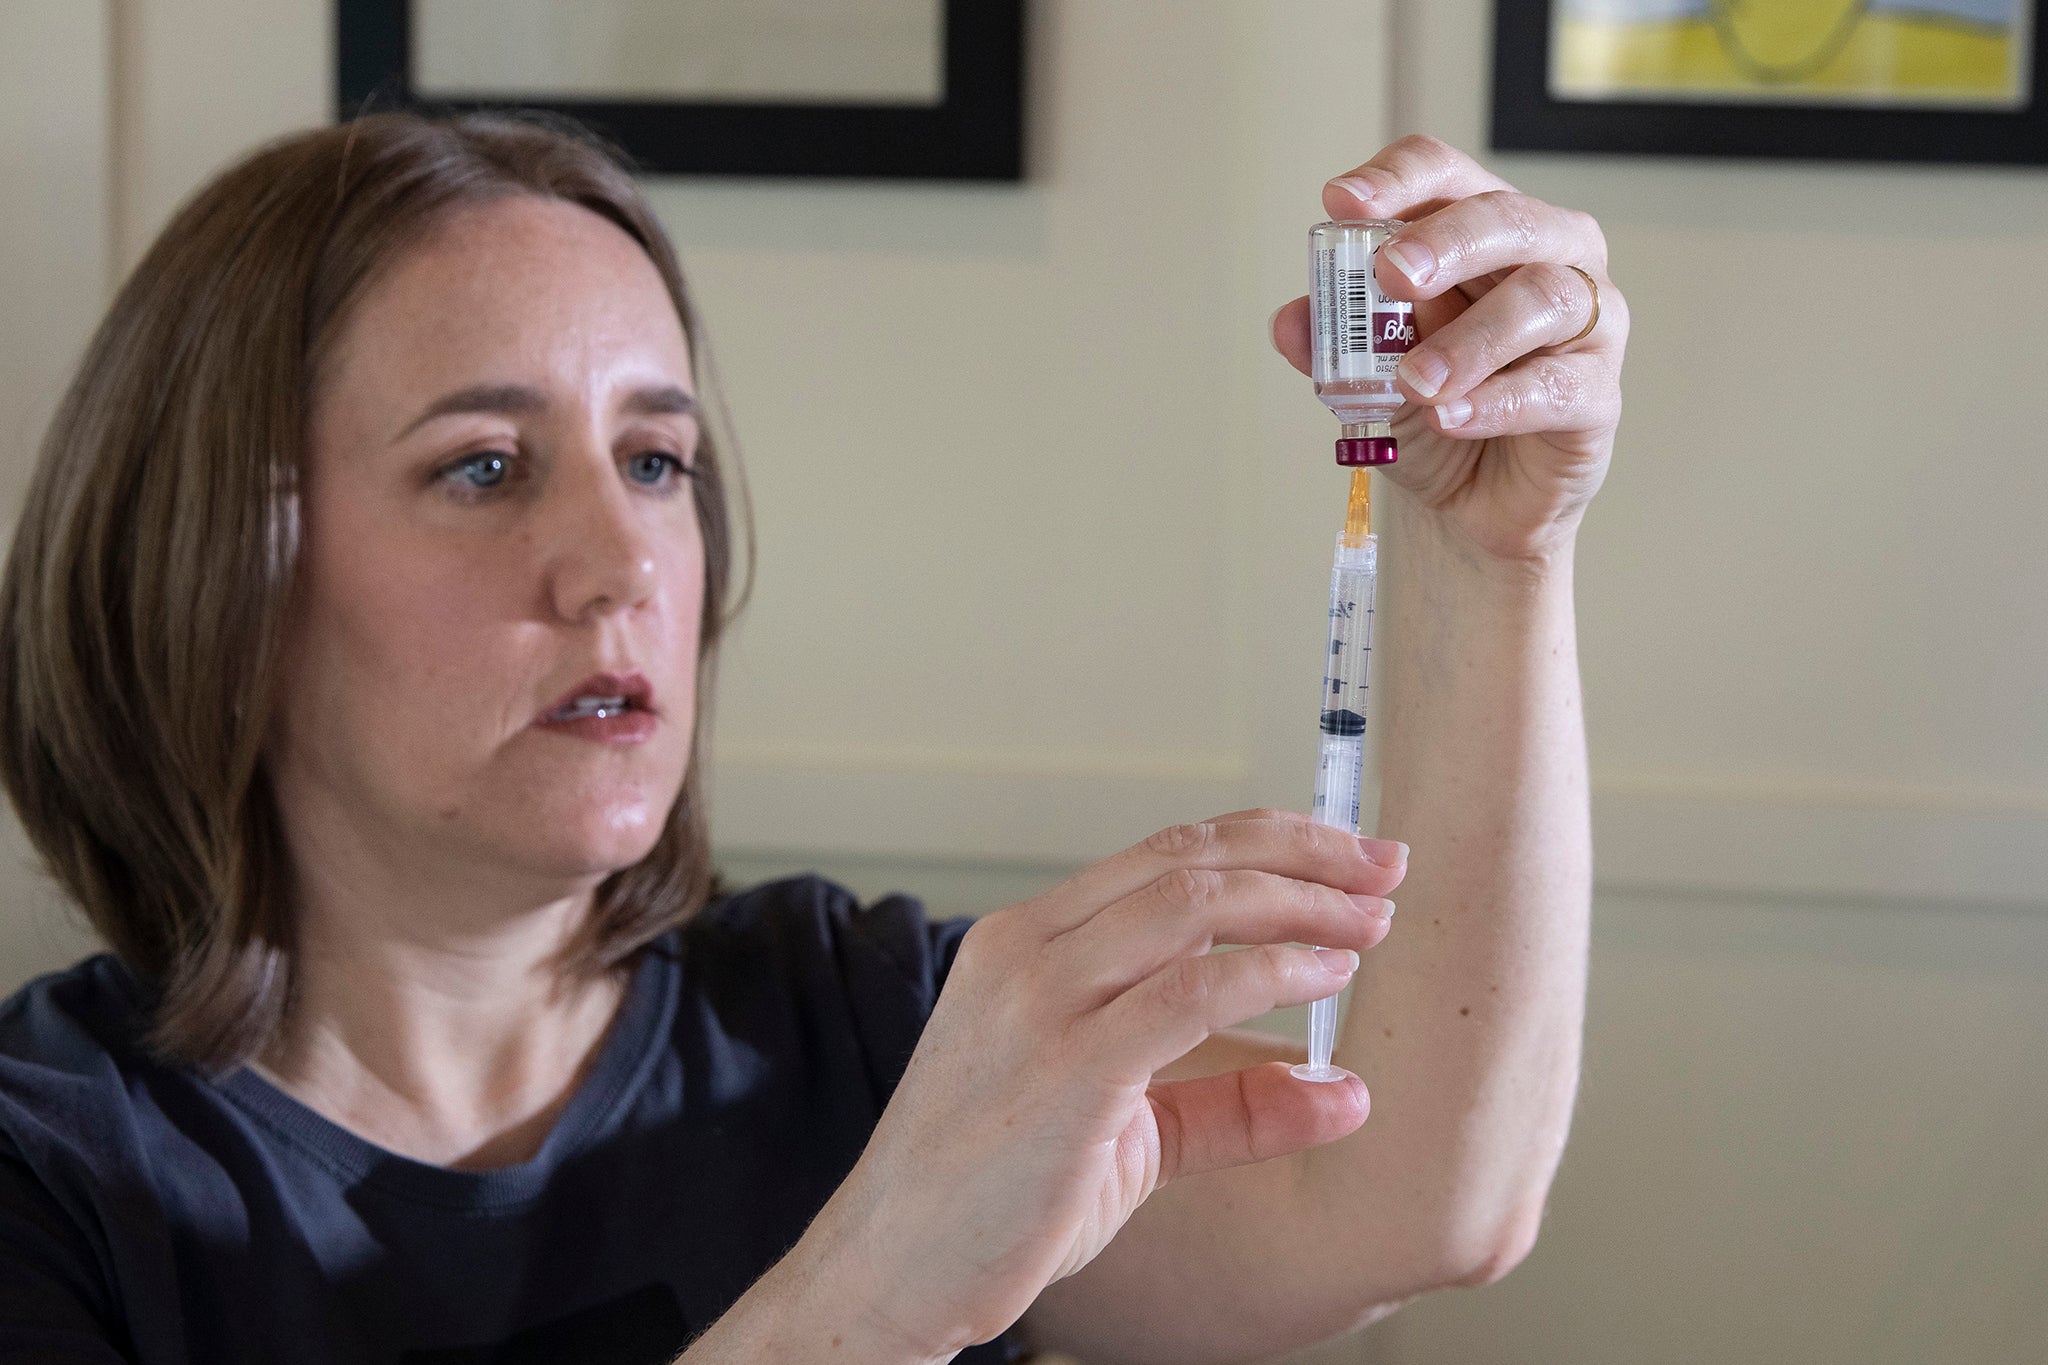 Greenseid draws insulin from a vial to fill a pump cartridge